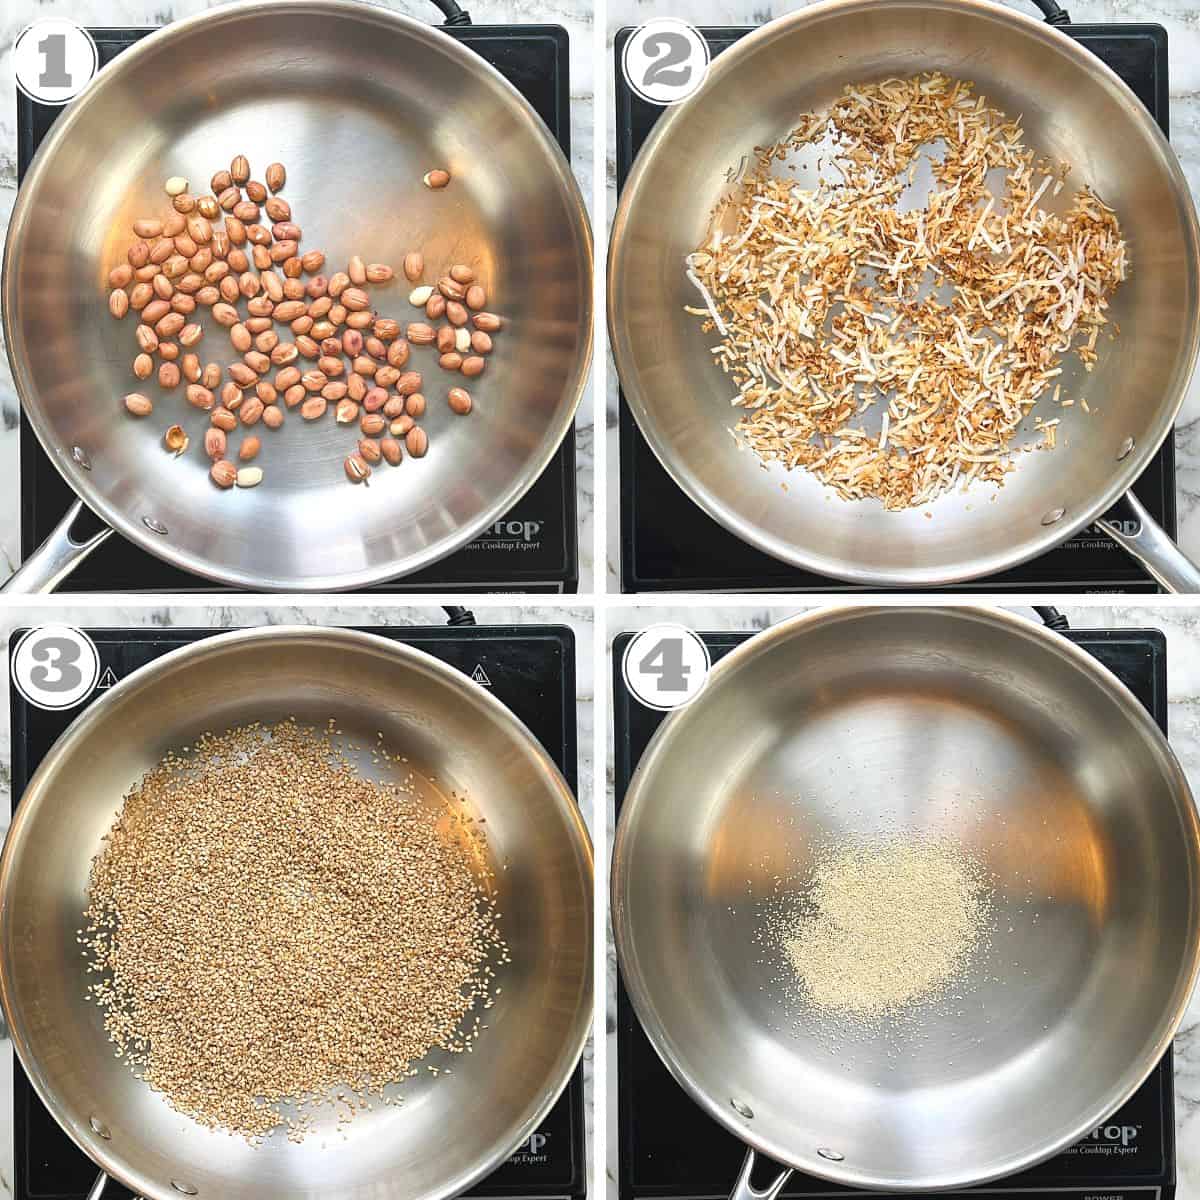 photos one through four showing roasting ingredients for maswadi filling 